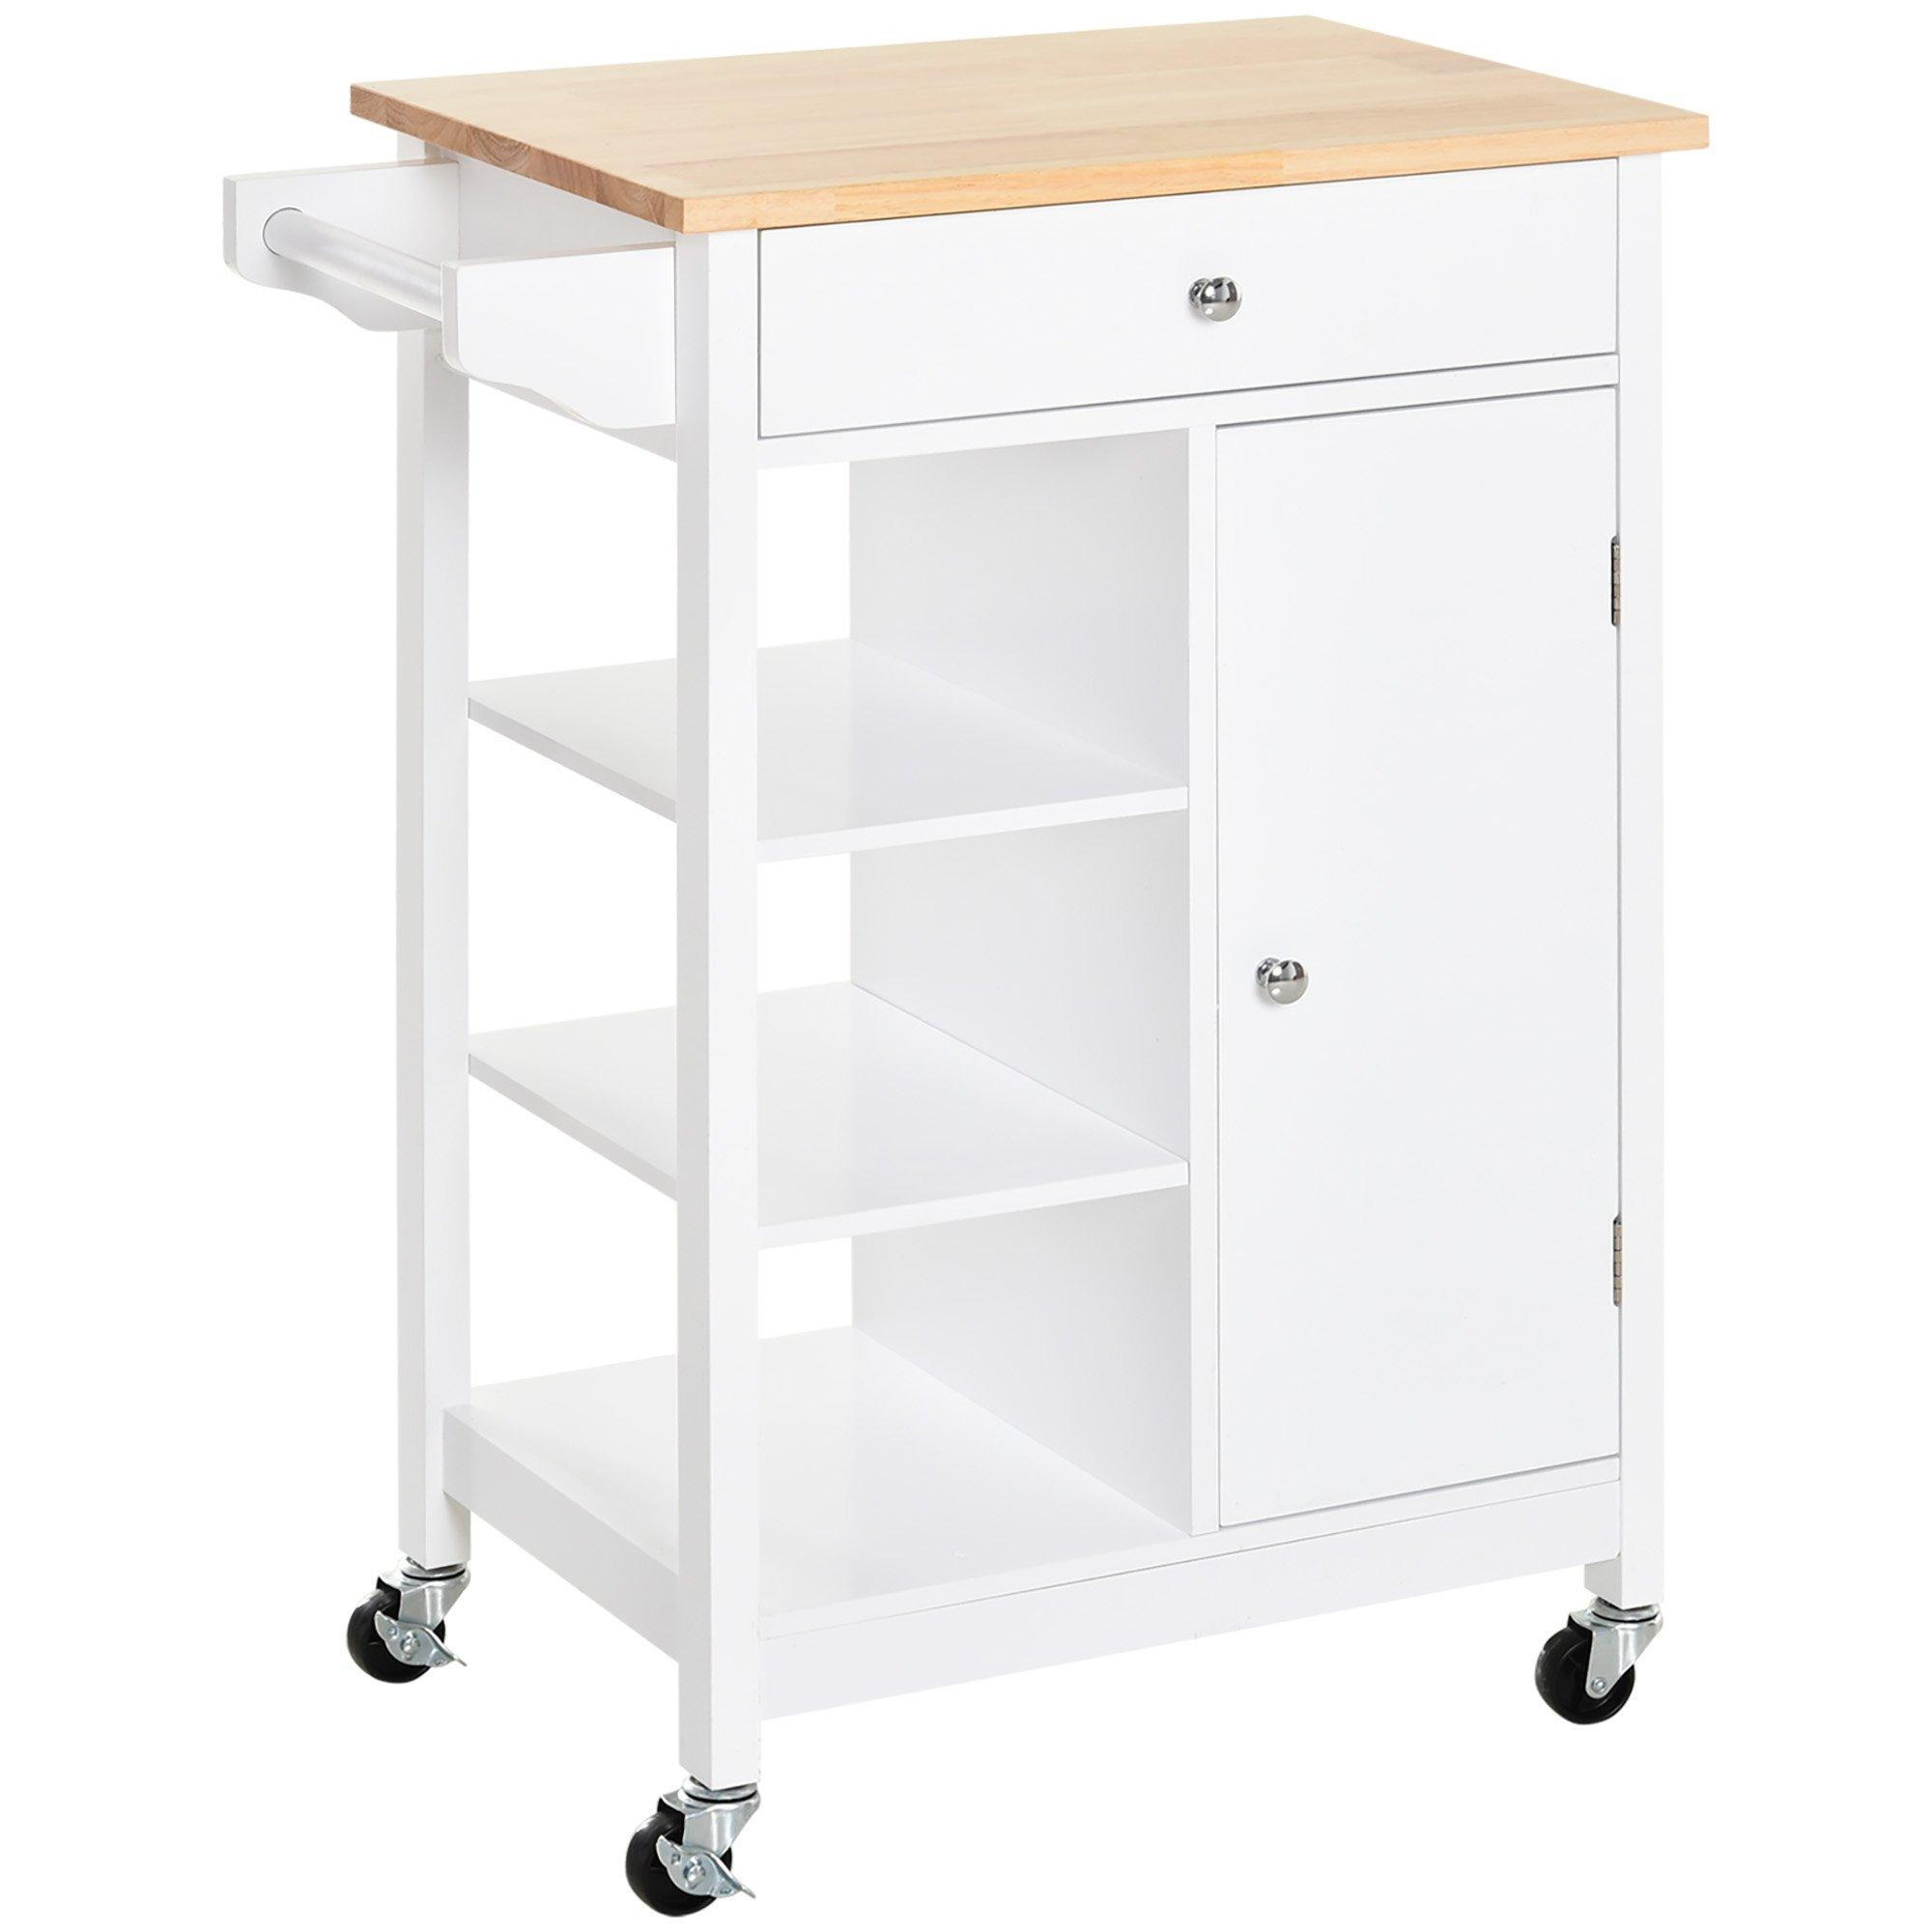 Kitchen Storage Trolley Cart Unit   Wood Top Shelves Cupboard Drawer - image 1